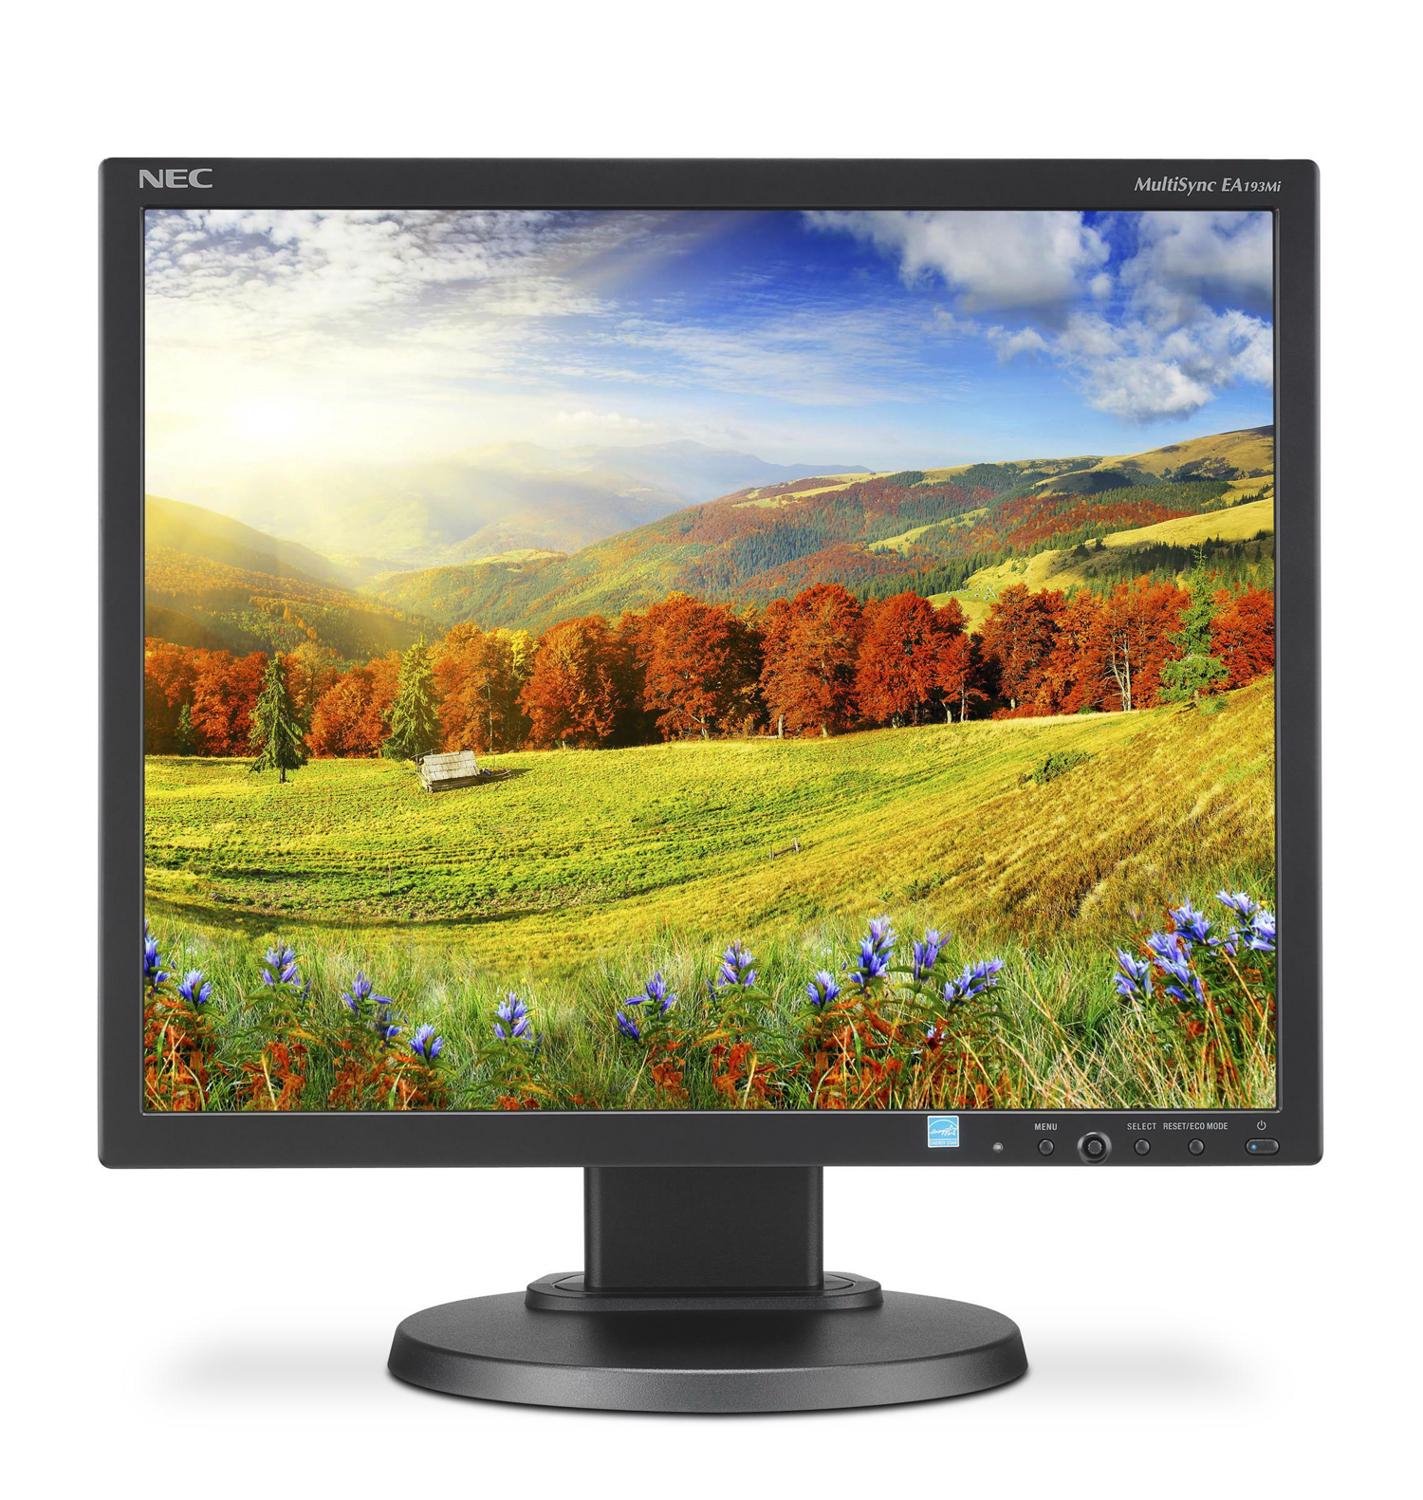 NEC Display MultiSync EA193MI-BK 19" SXGA LED LCD Monitor - 5:4 - Black